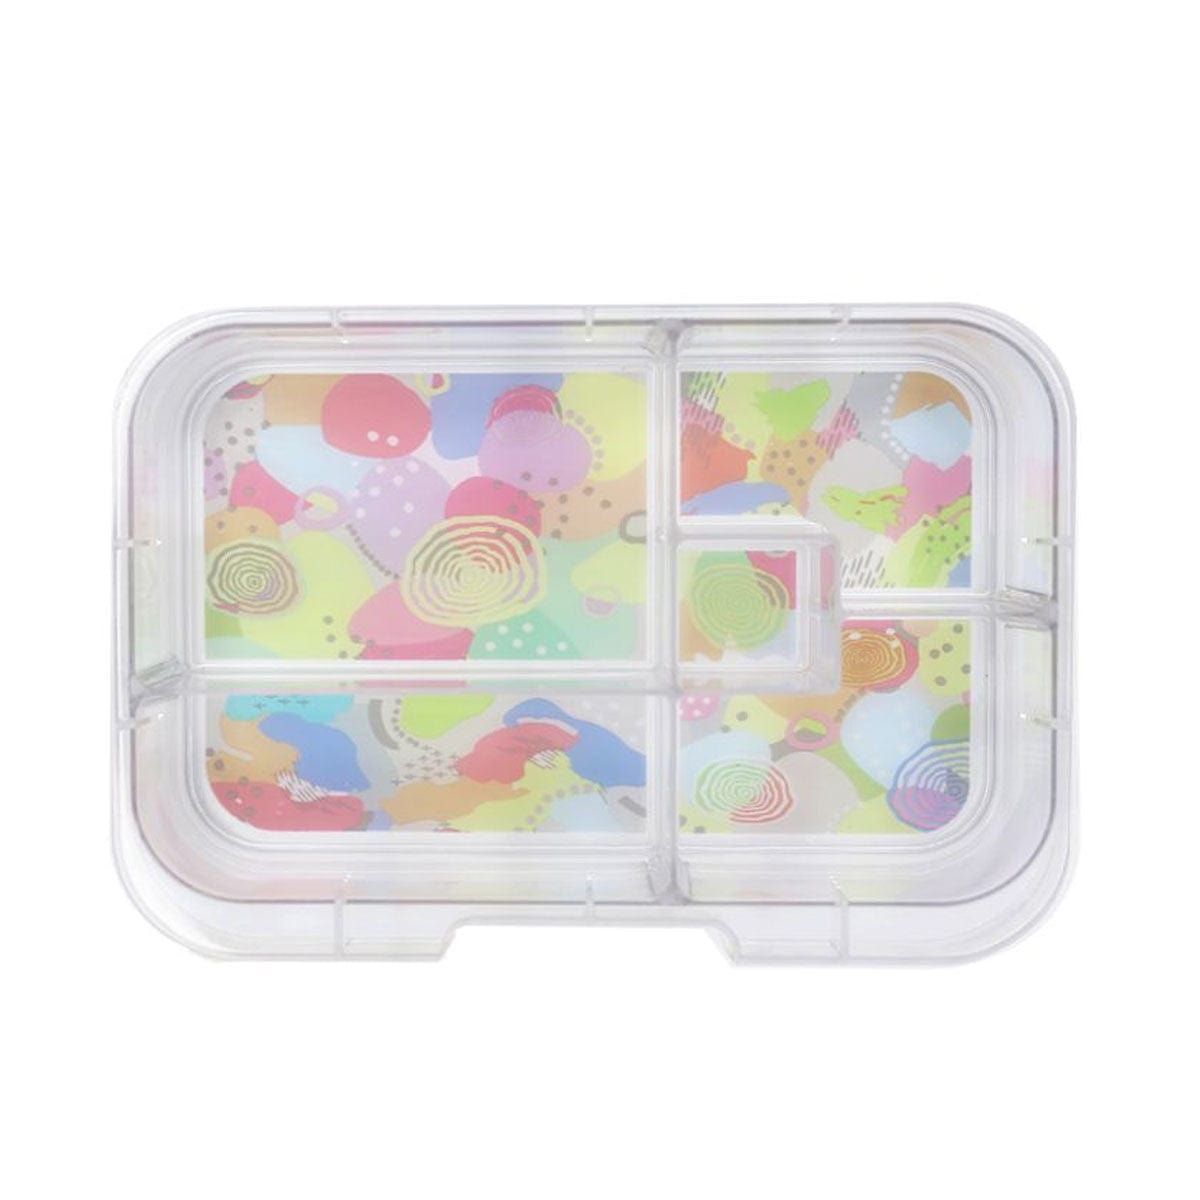 Munchbox bento box Munchbox Midi5 Pastel Collection - Pink Flamingo